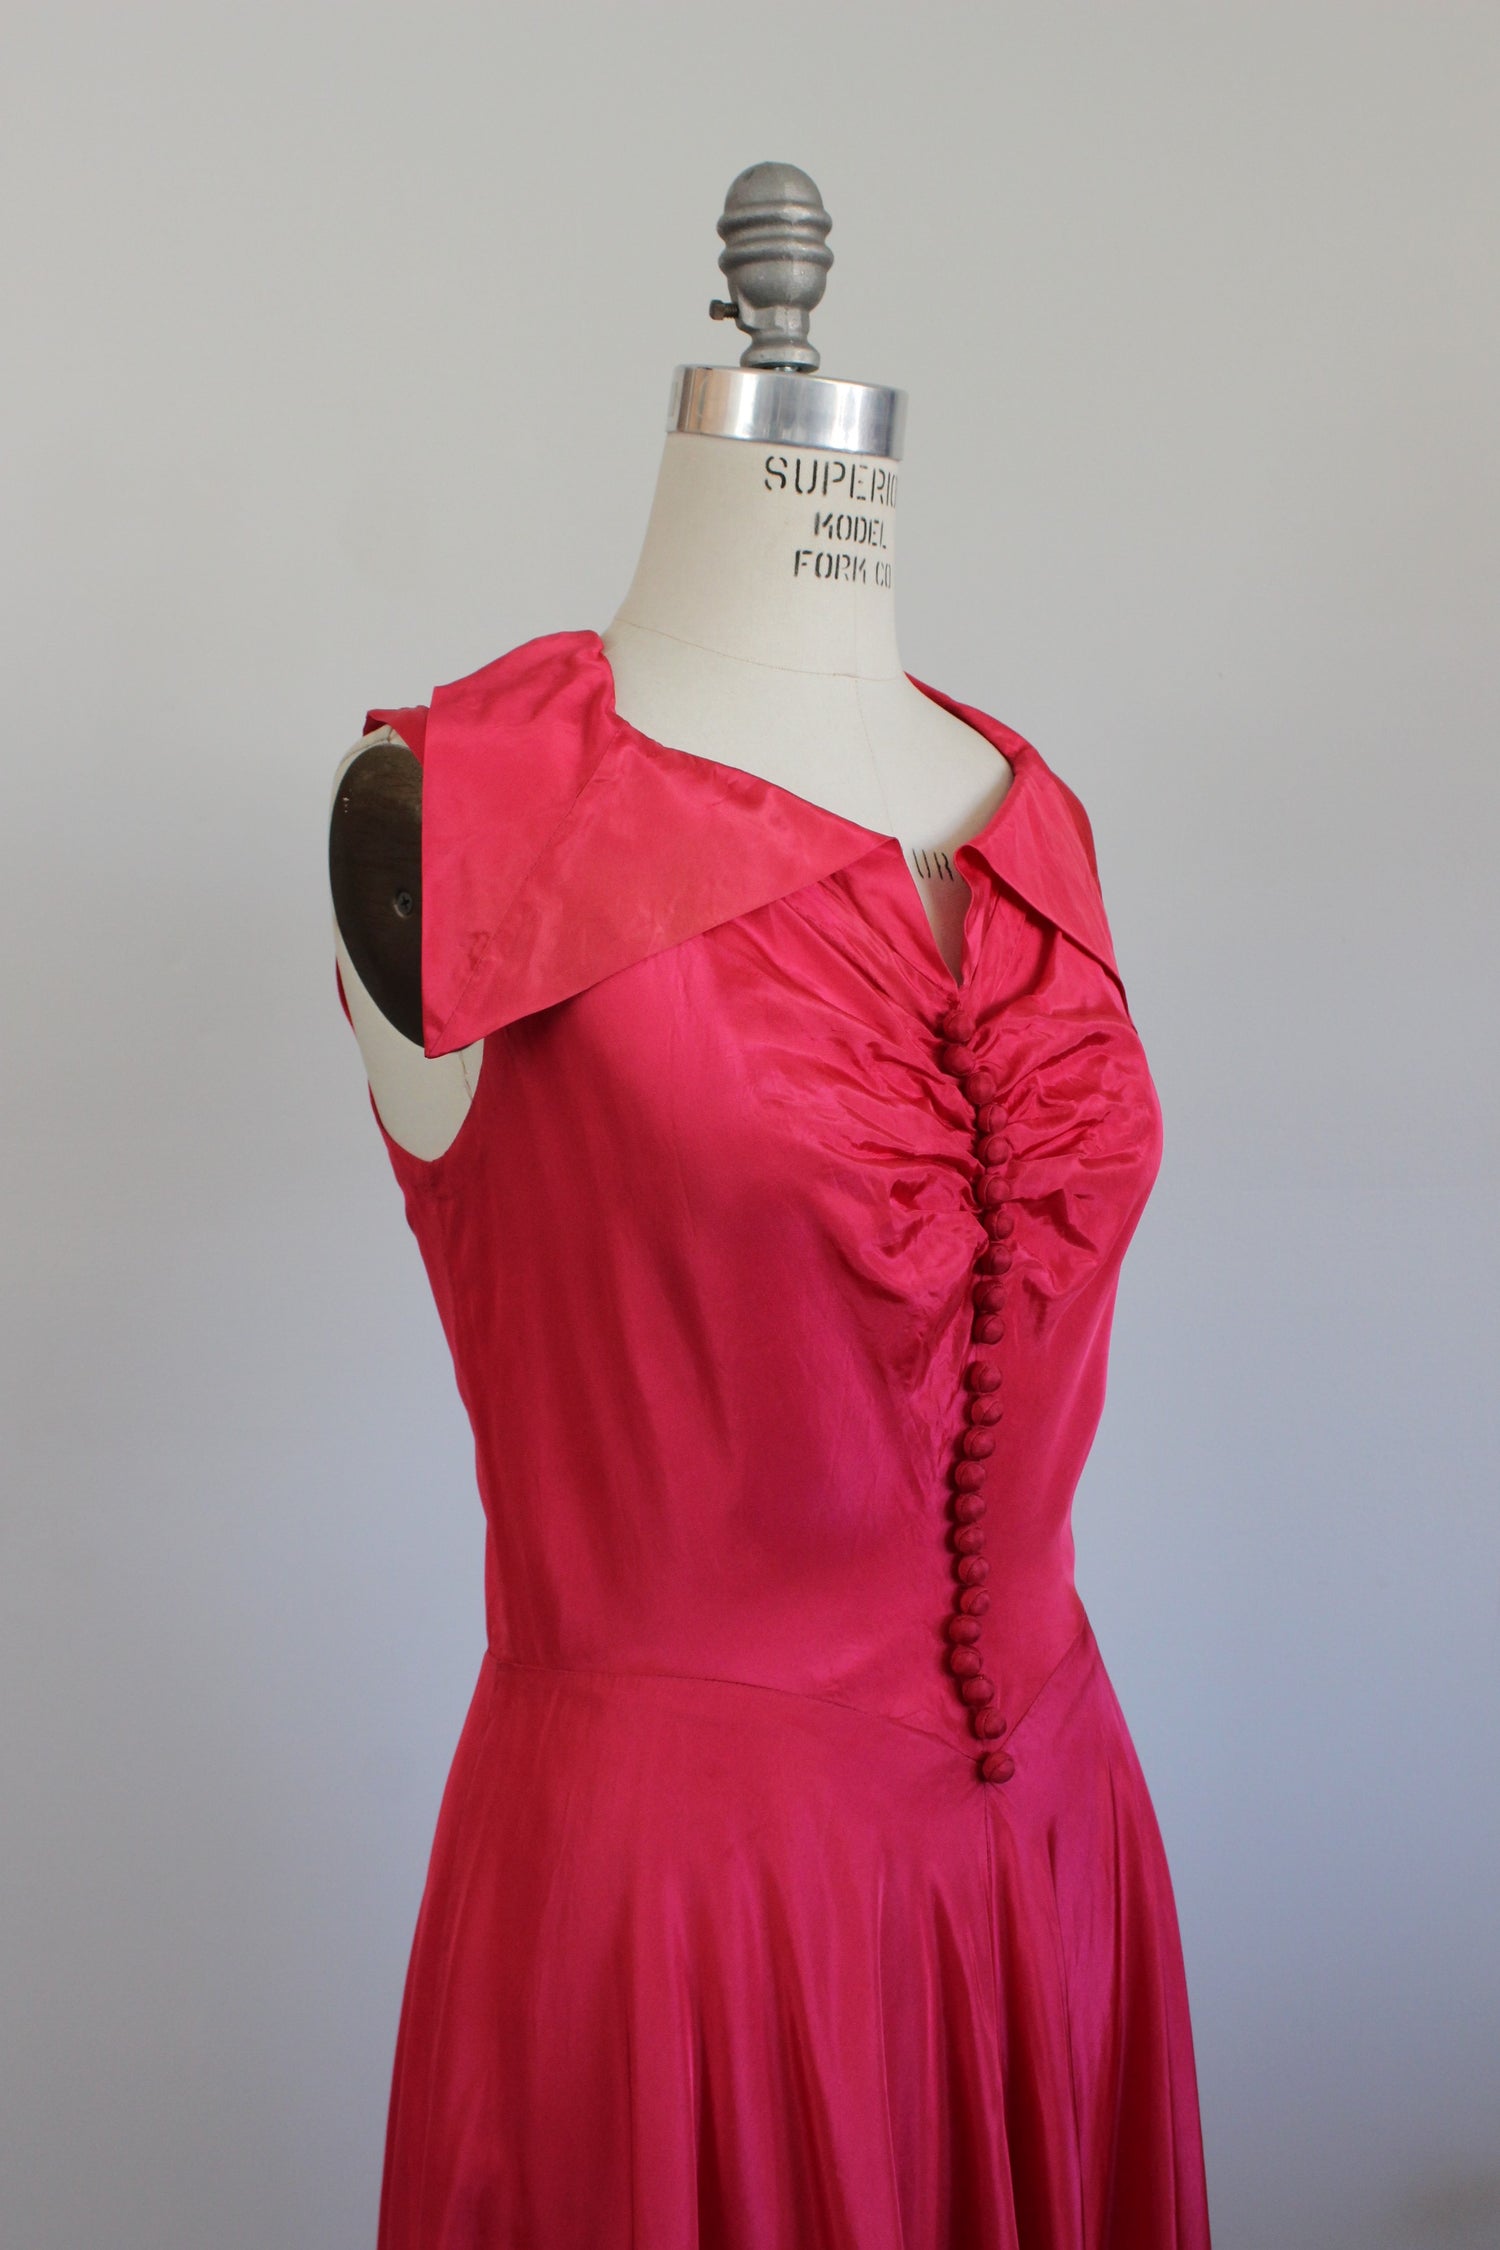 Vintage 1940s New Look Pink Taffeta Gown